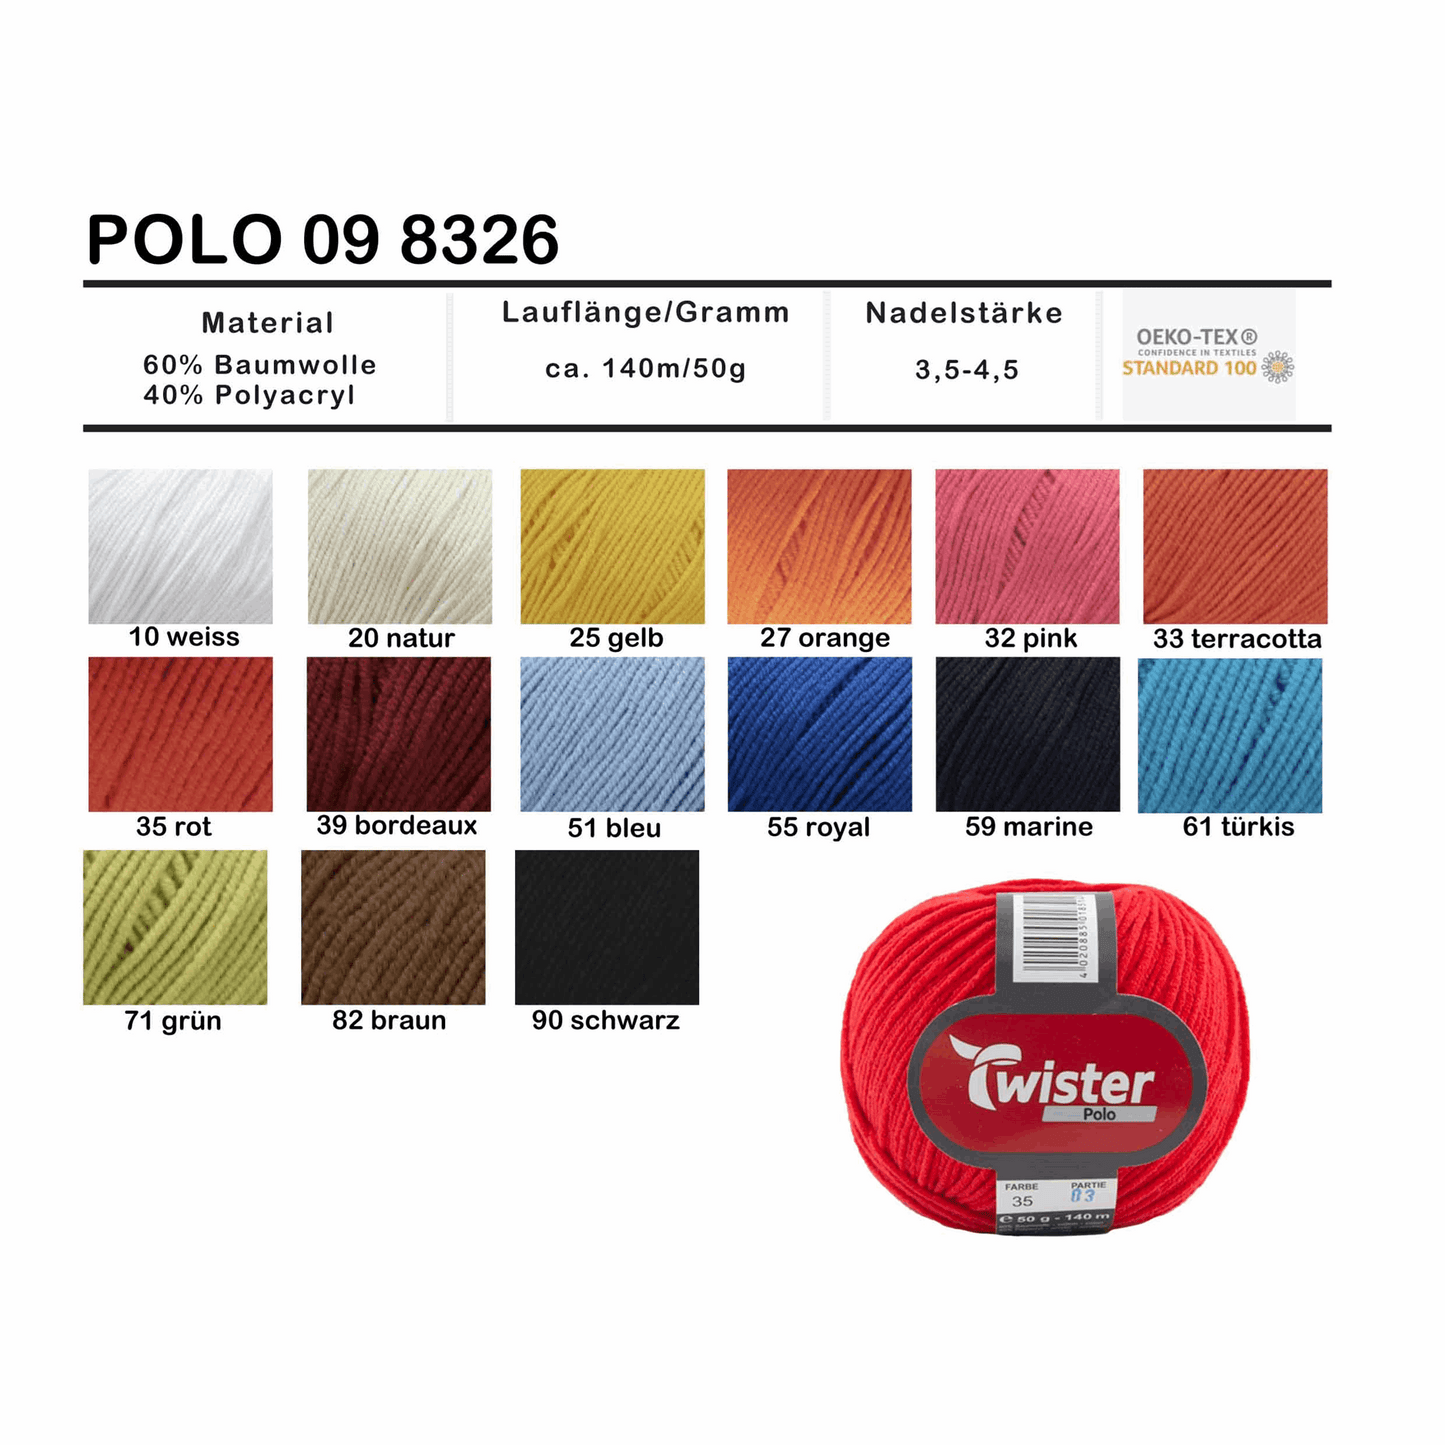 Twister Polo uni, 50g, 98326, Farbe orange 27